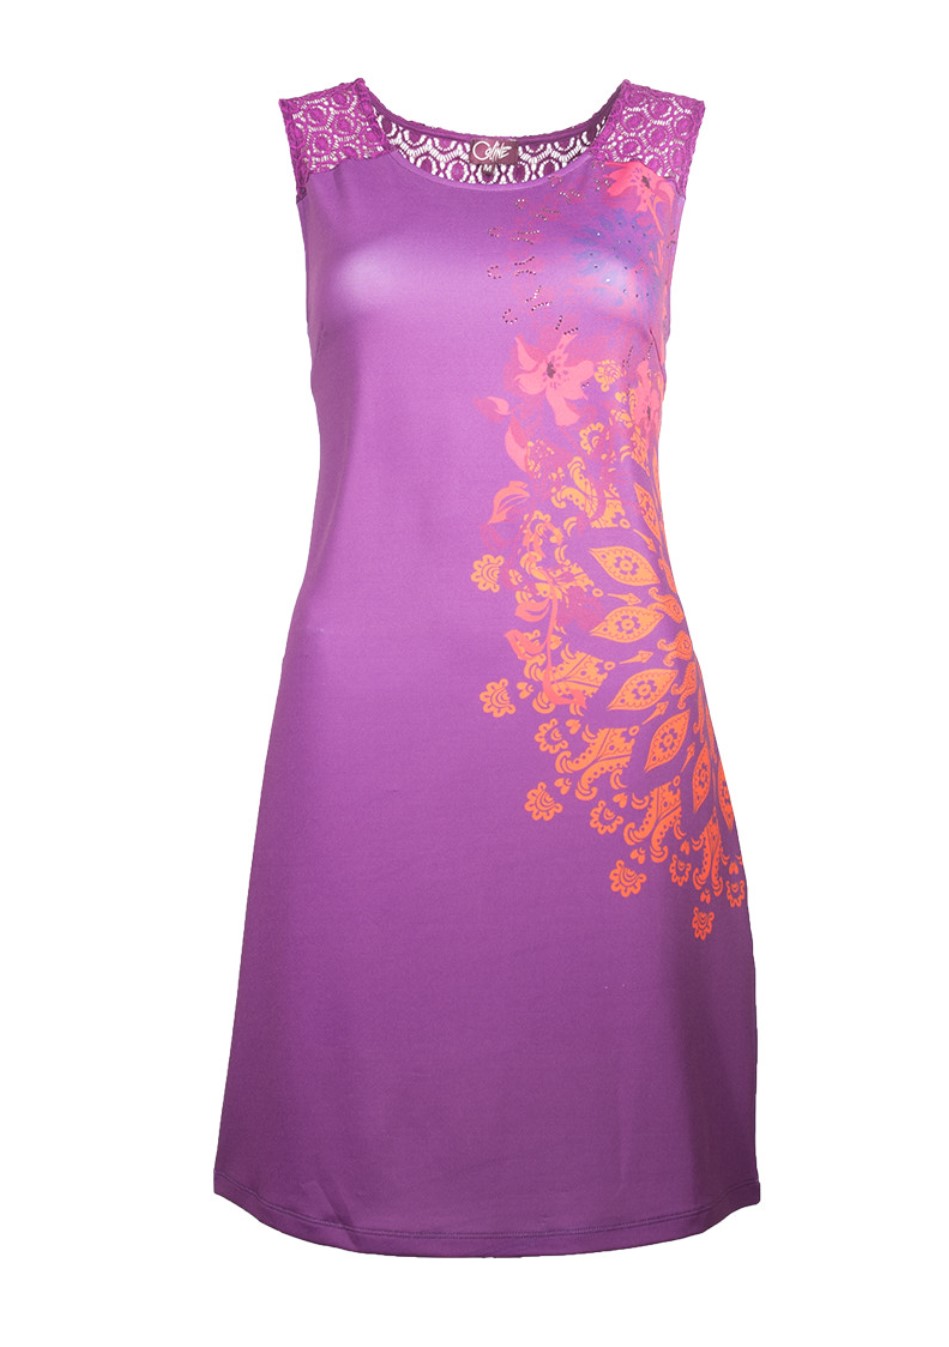 Lace Neck Dress With Patterned Front Purple Small - El Emporio de Zoe